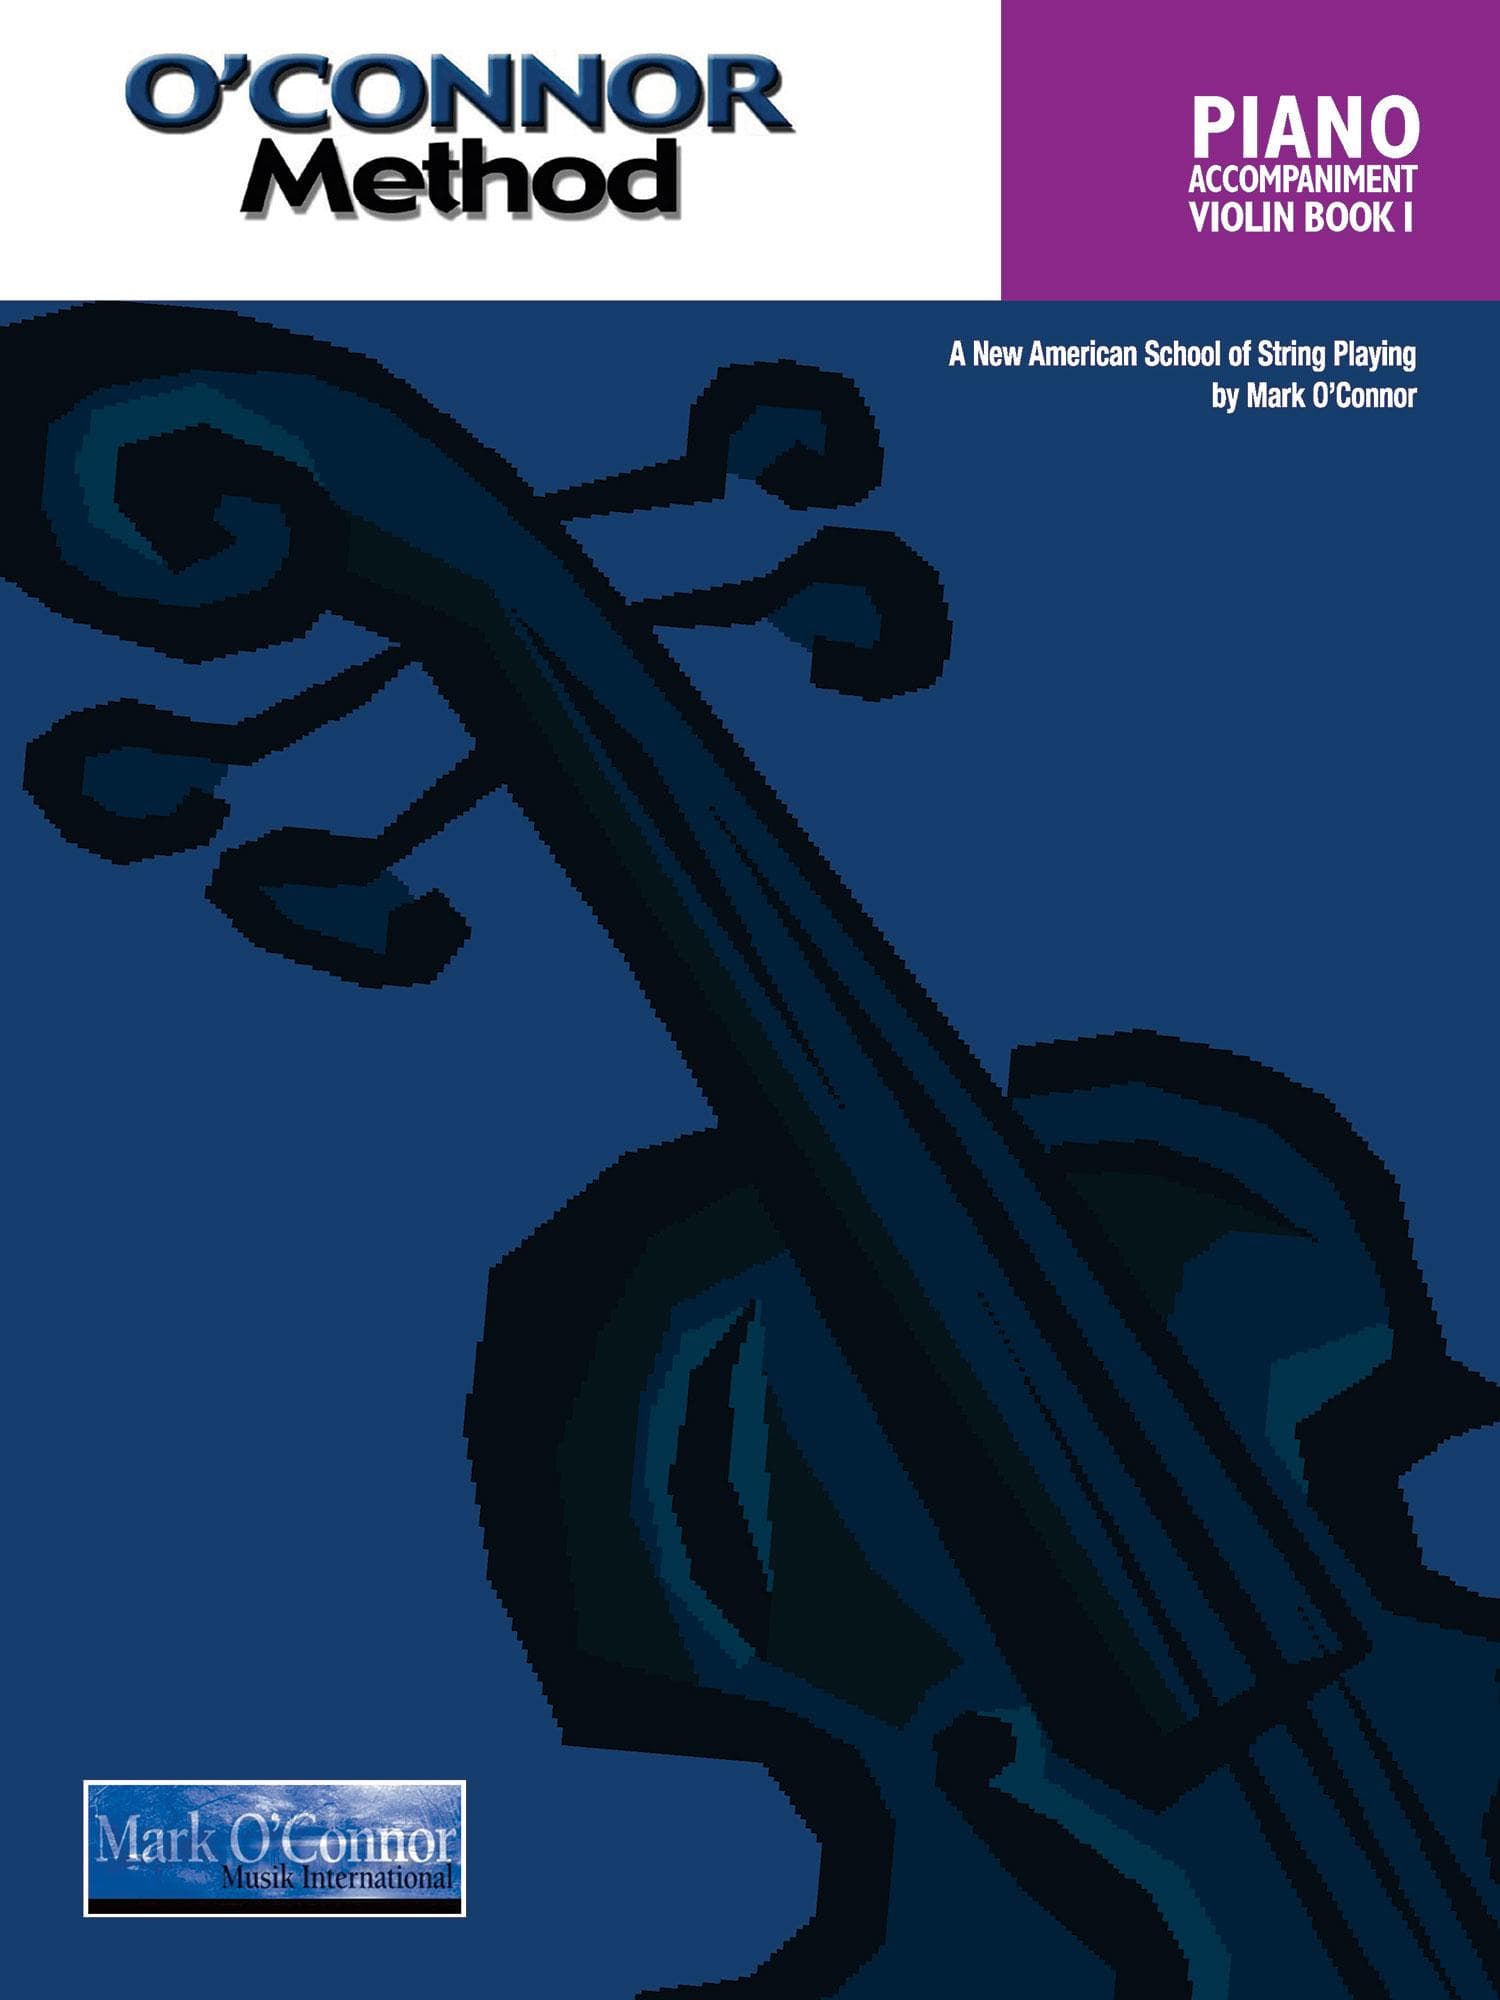 O'Connor Violin Method Book I - Piano Accompaniment